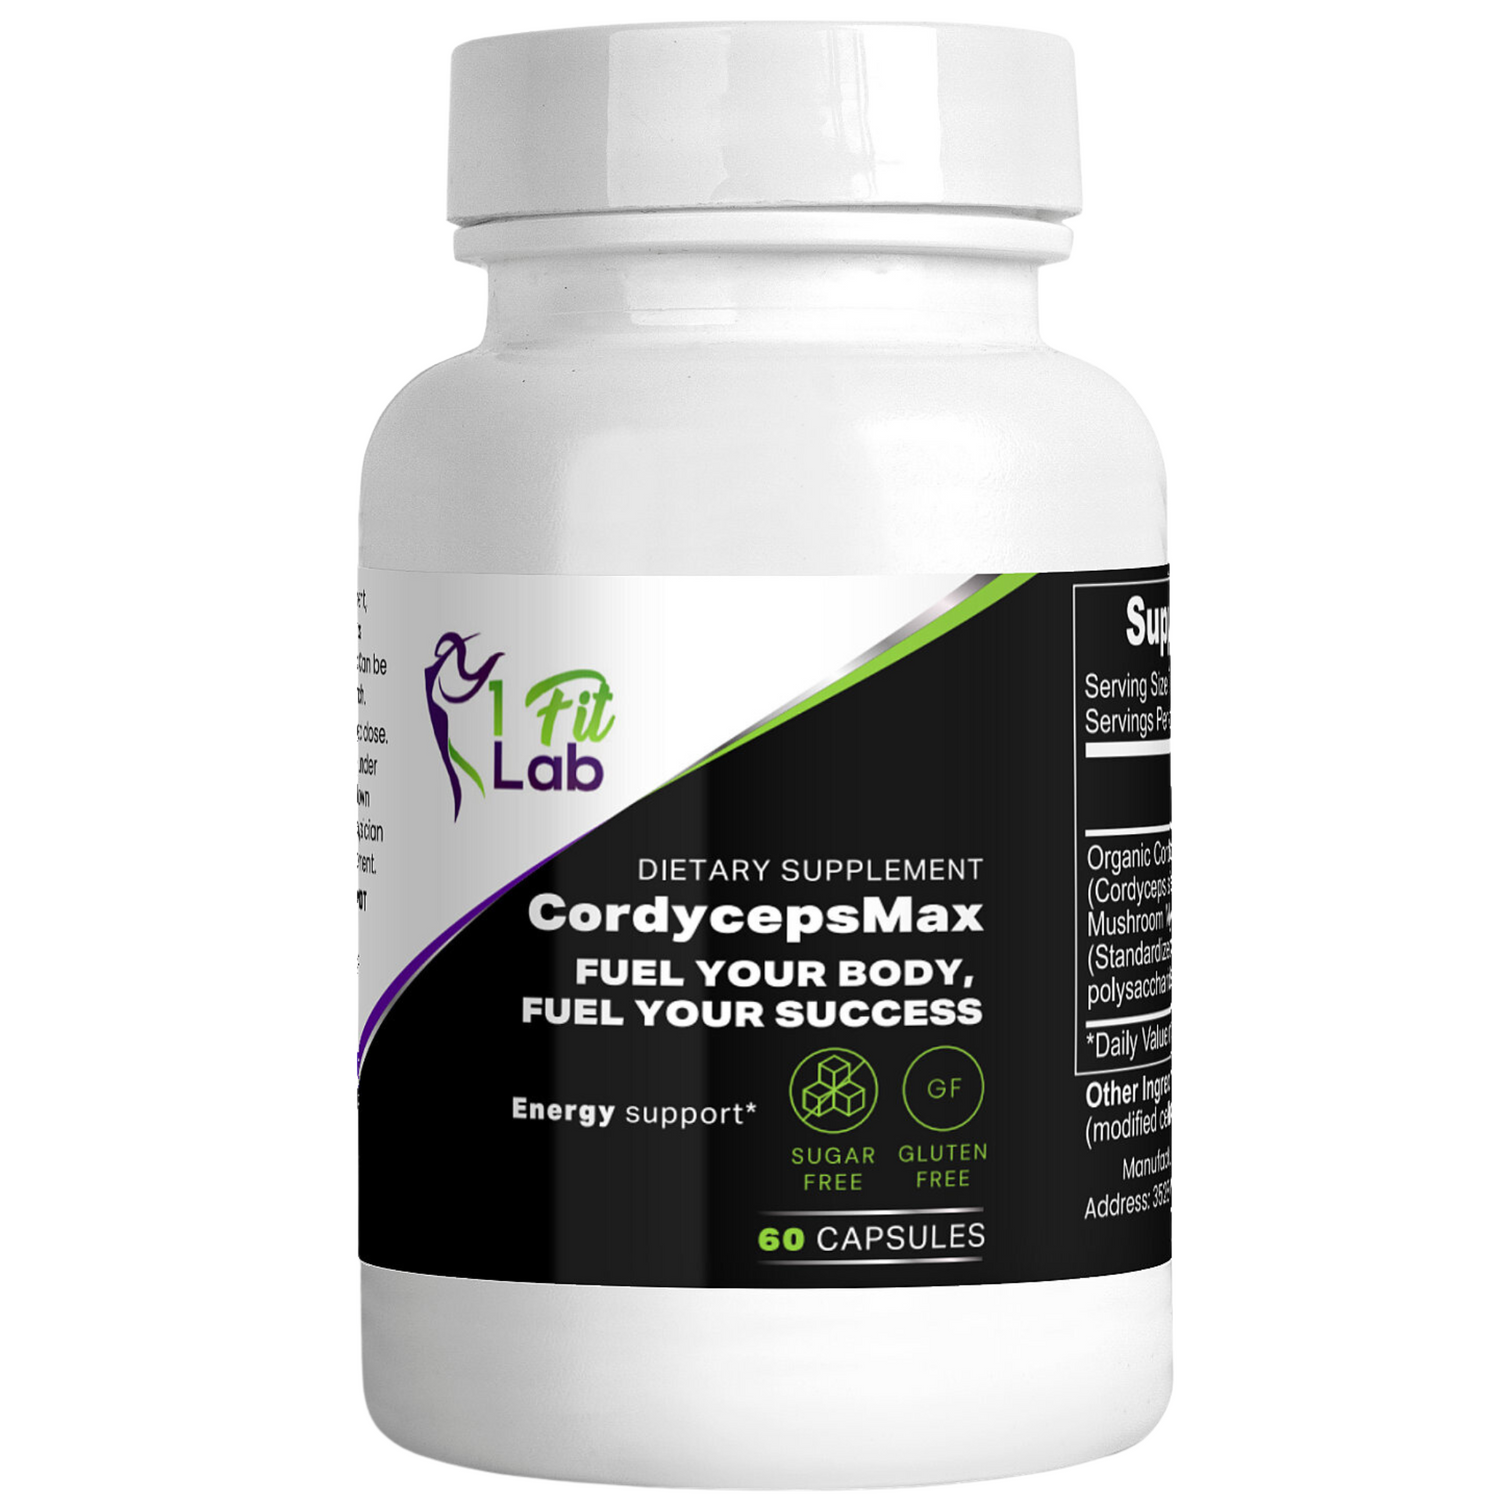 Bottle of CordycepsMax Premium Cordyceps Mushroom Extract for enhanced vitality and performance